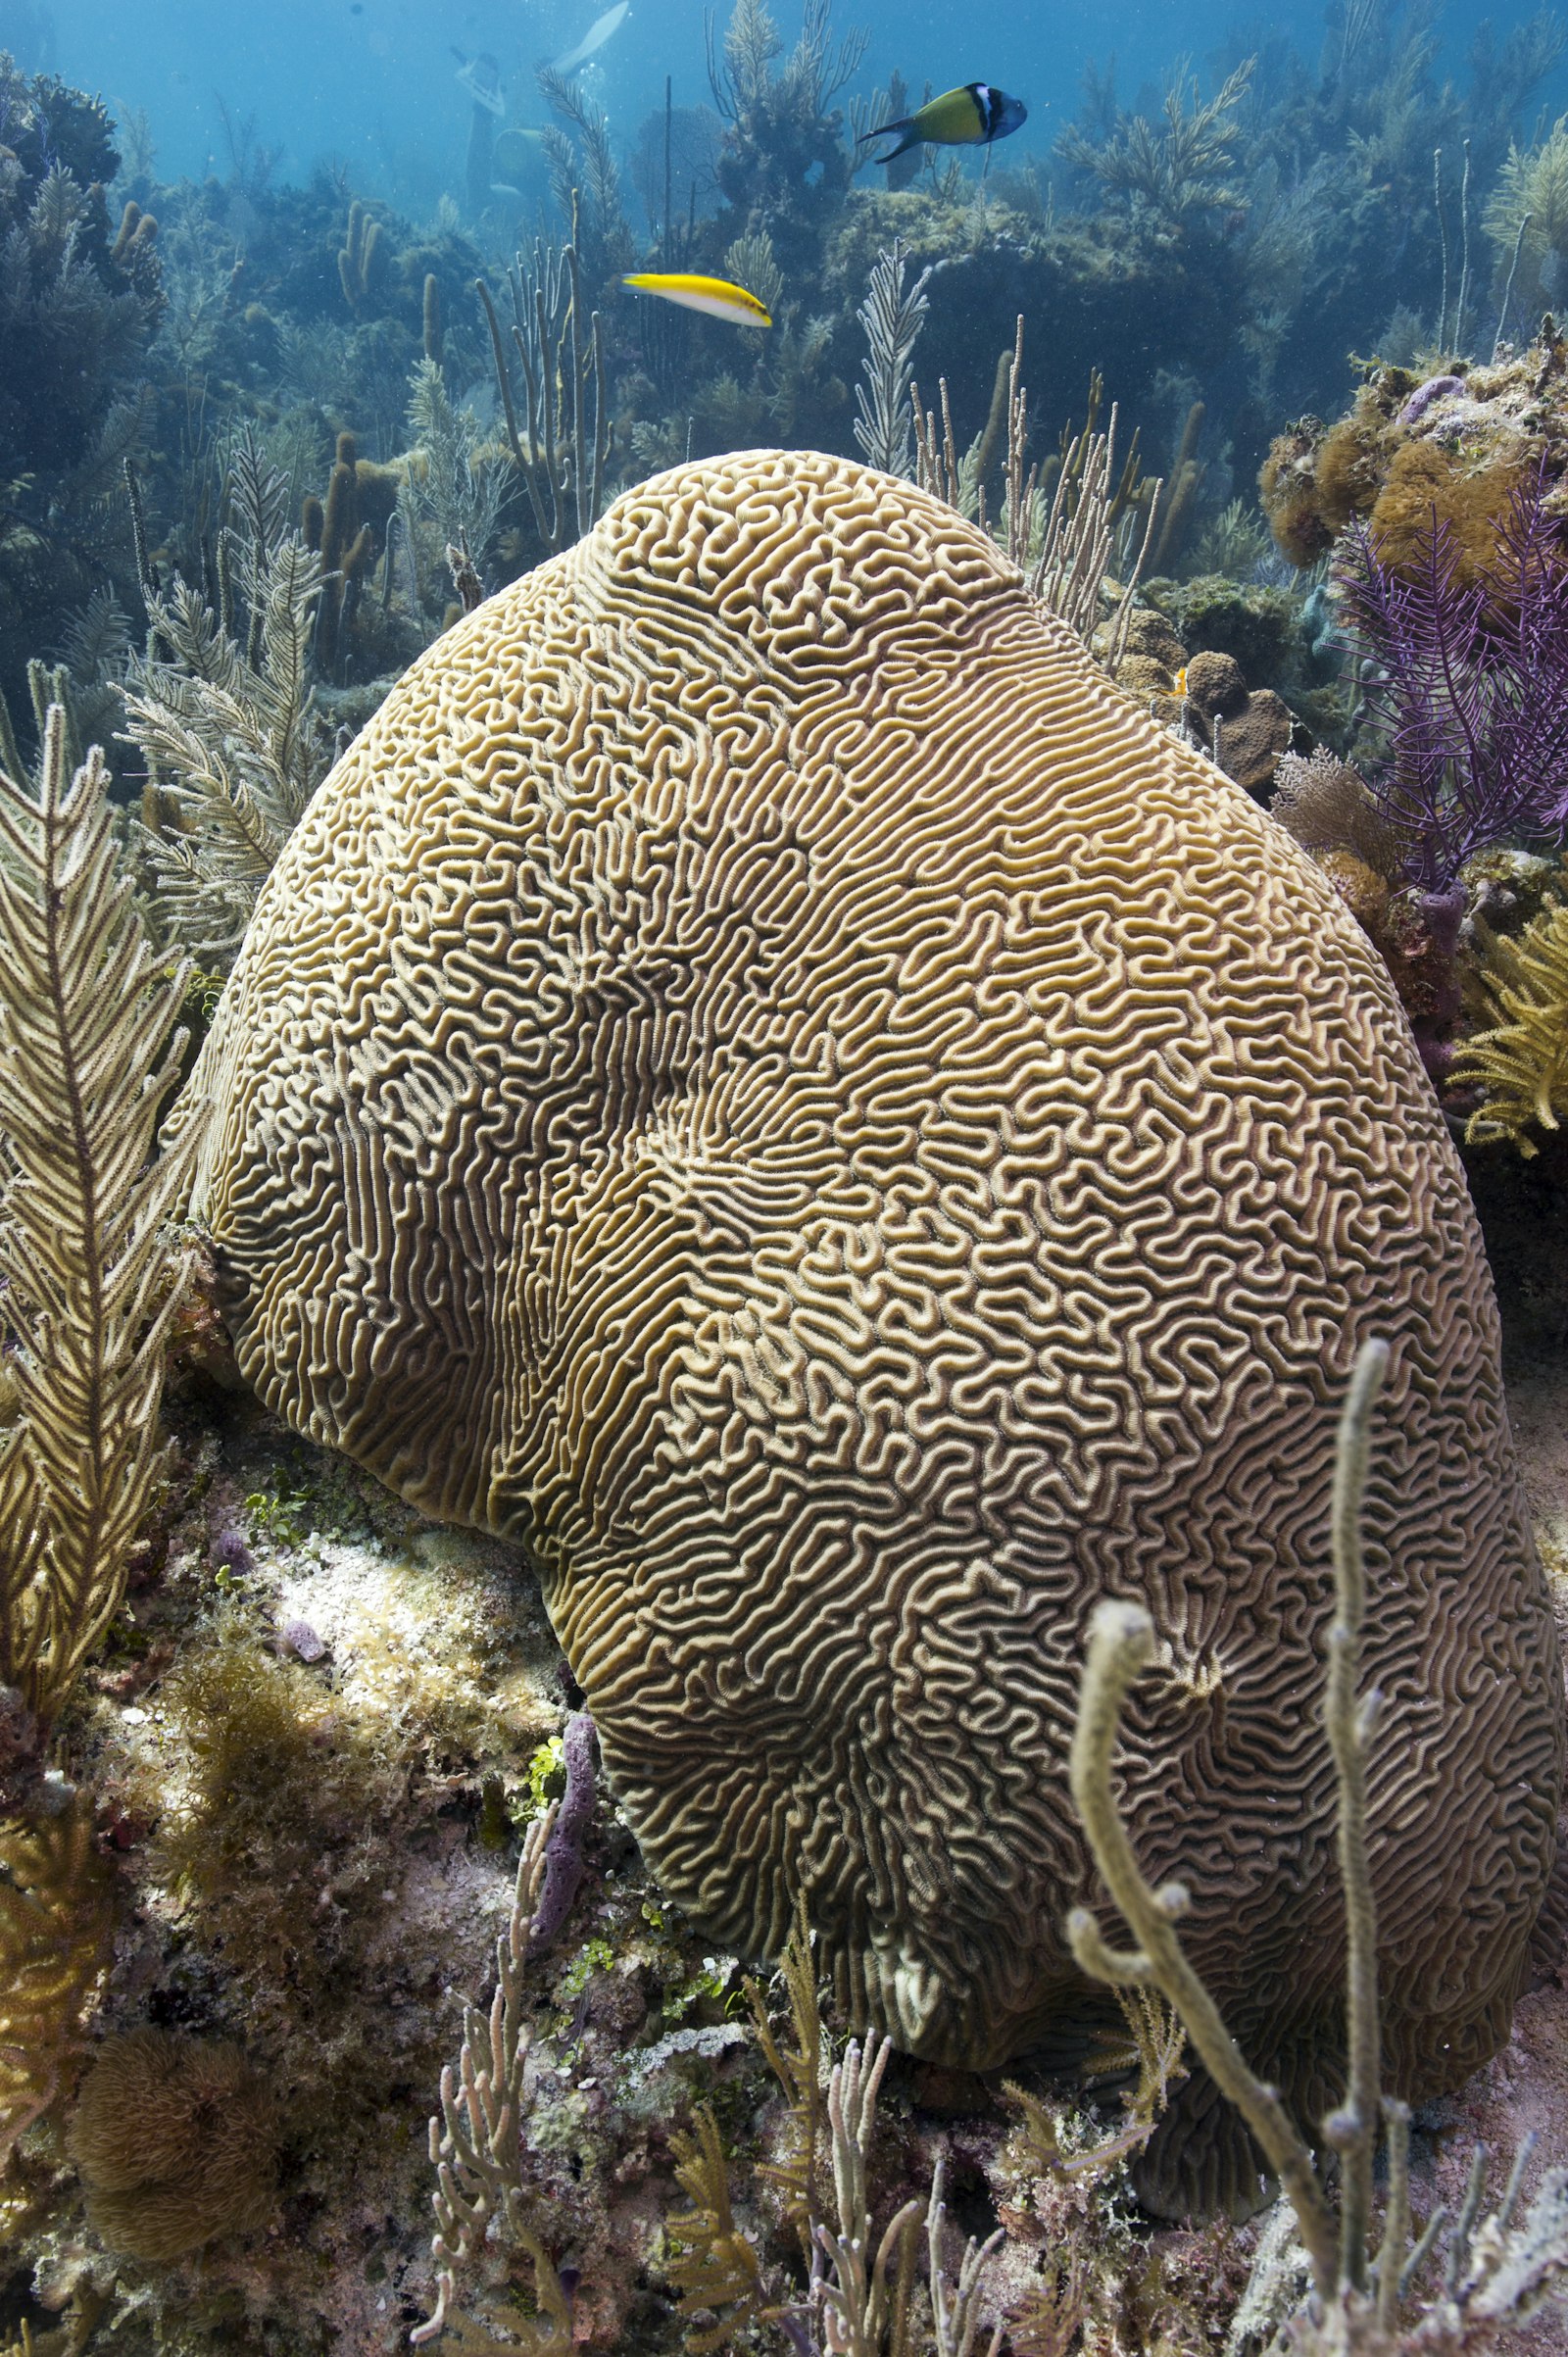 Underwater image of brain coral